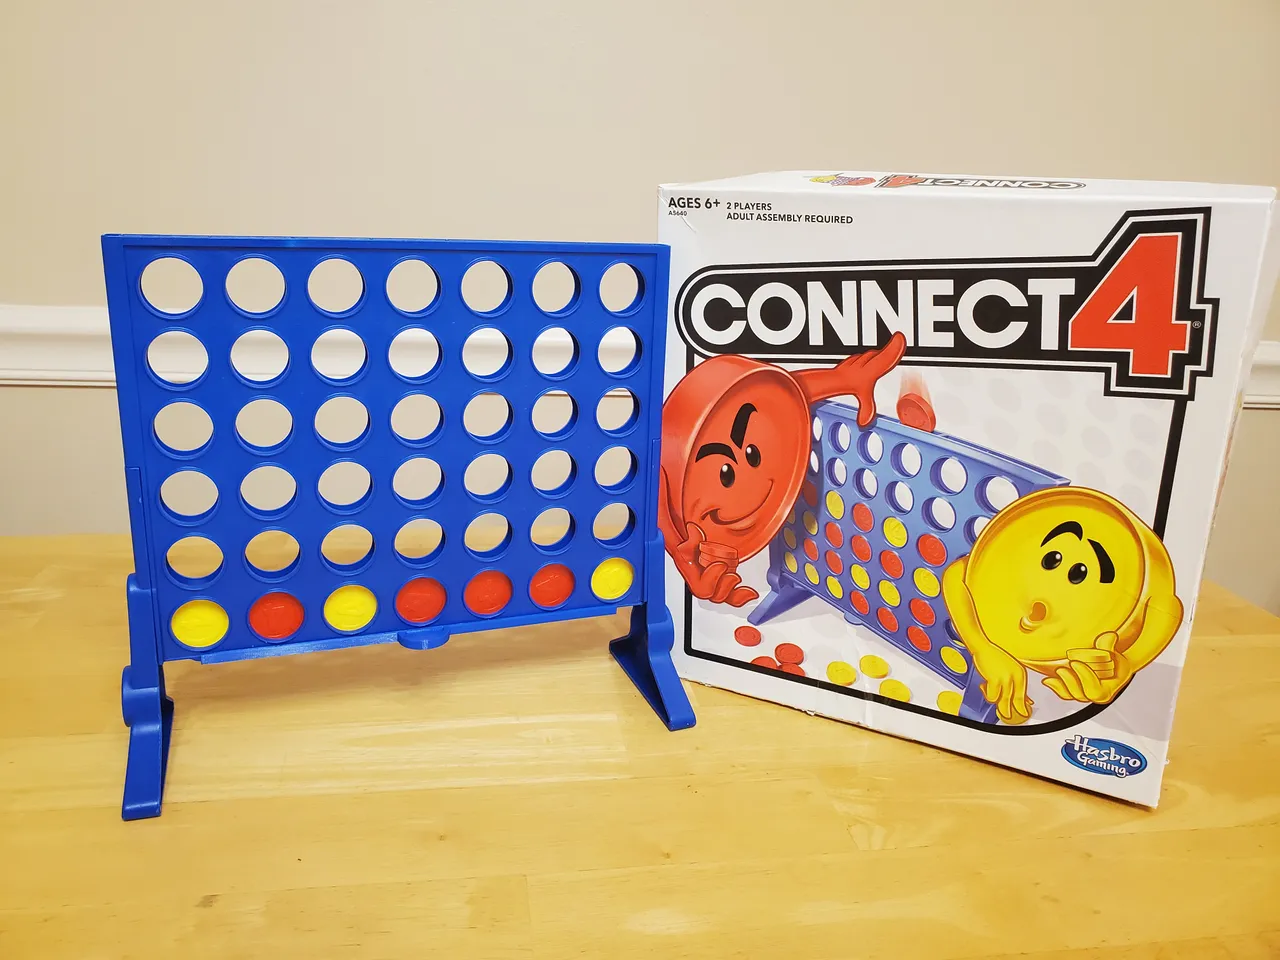 connect 4 board